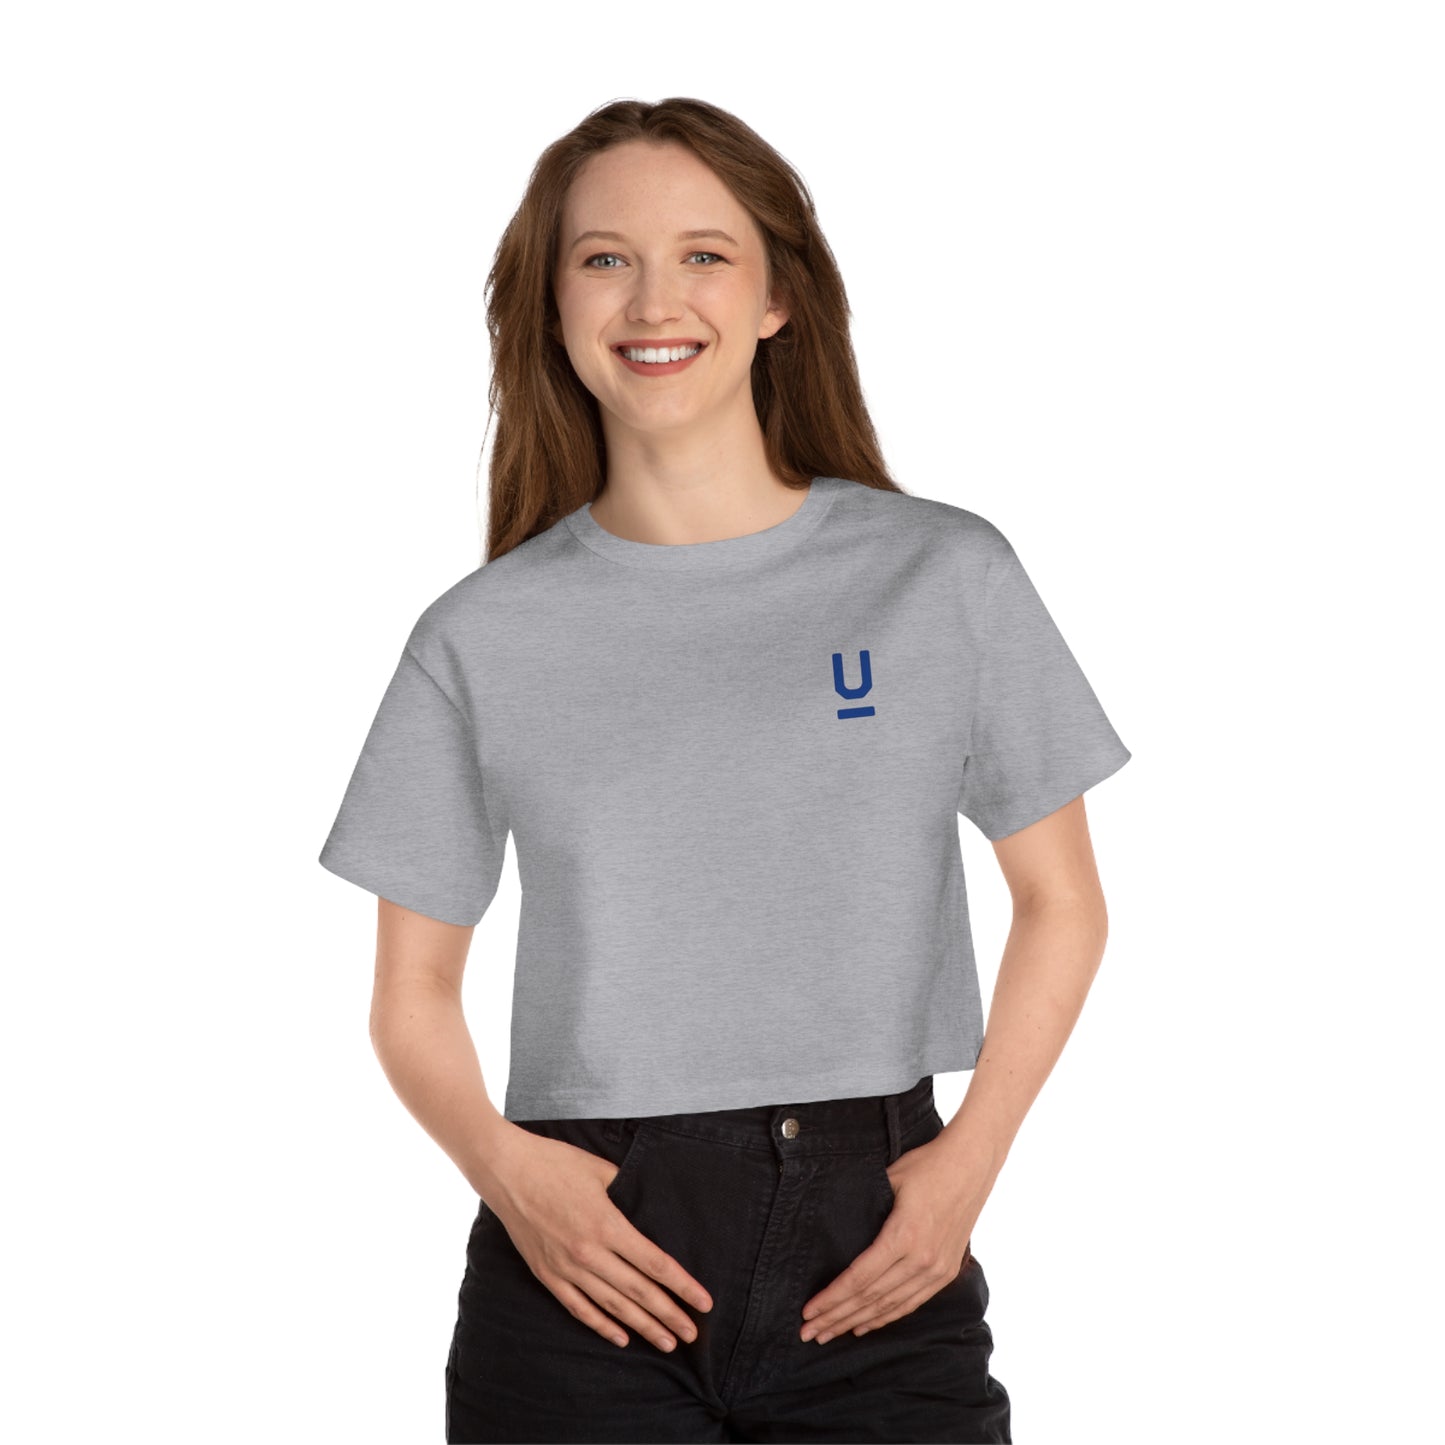 Camiseta corta para mujer - logo azul